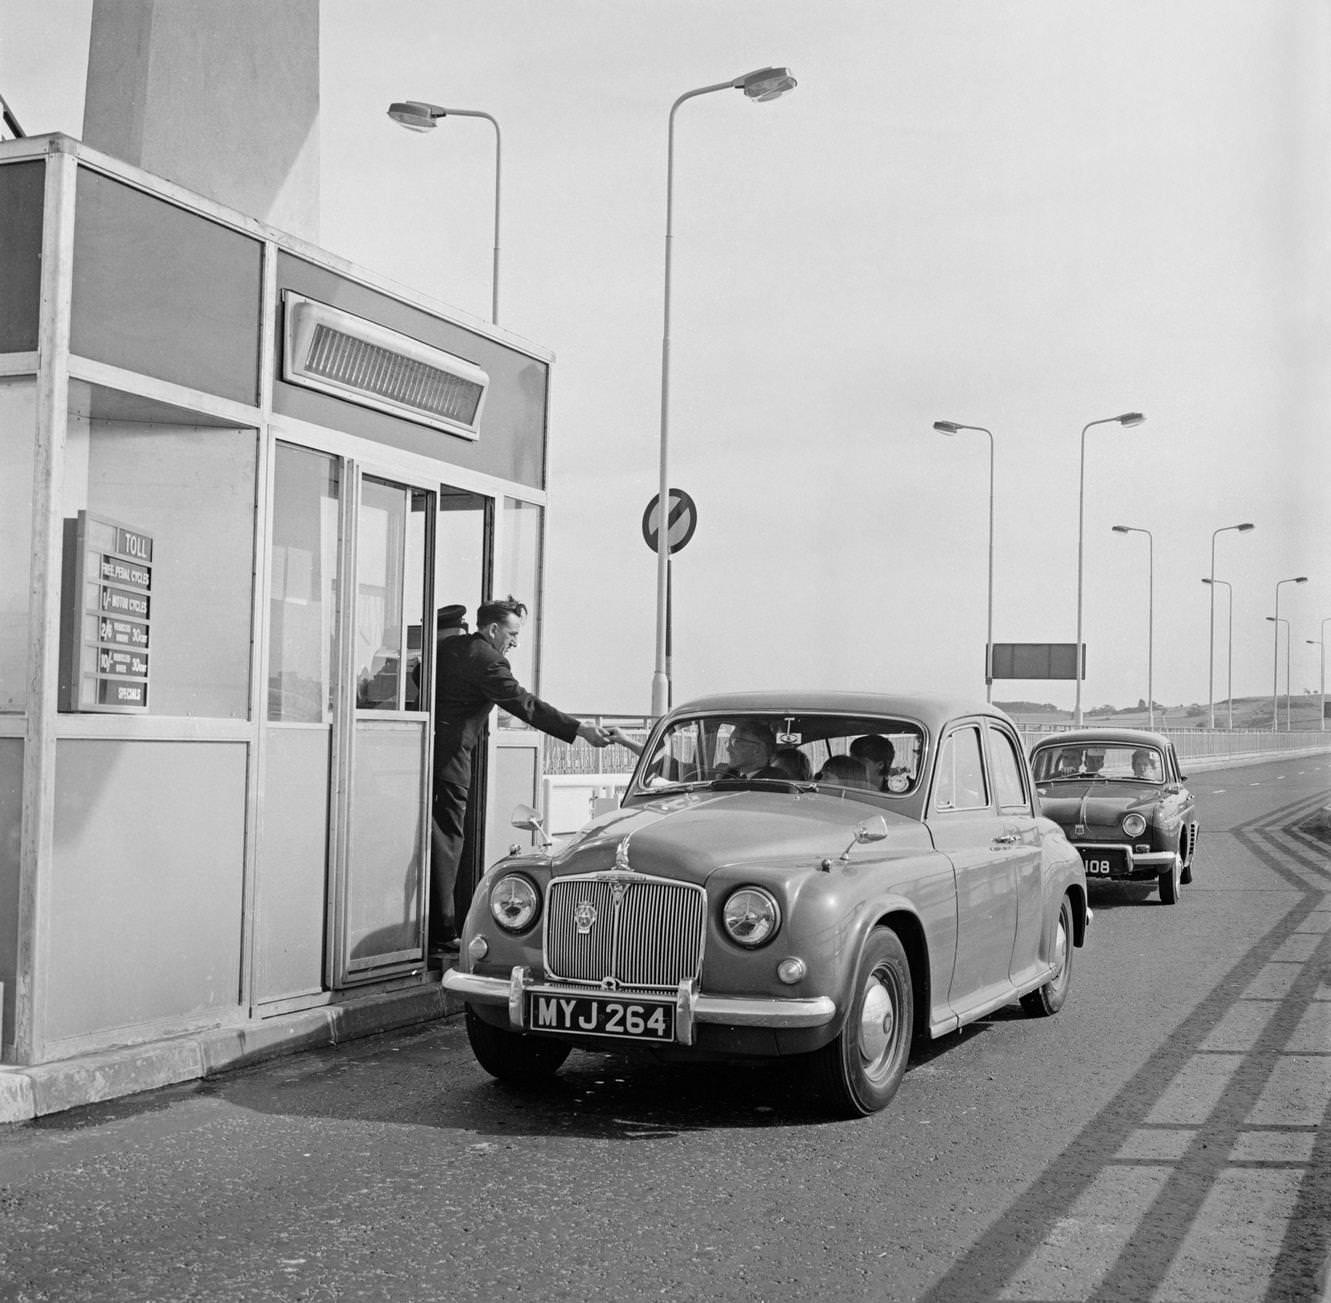 Tay Road Bridge, 1966.